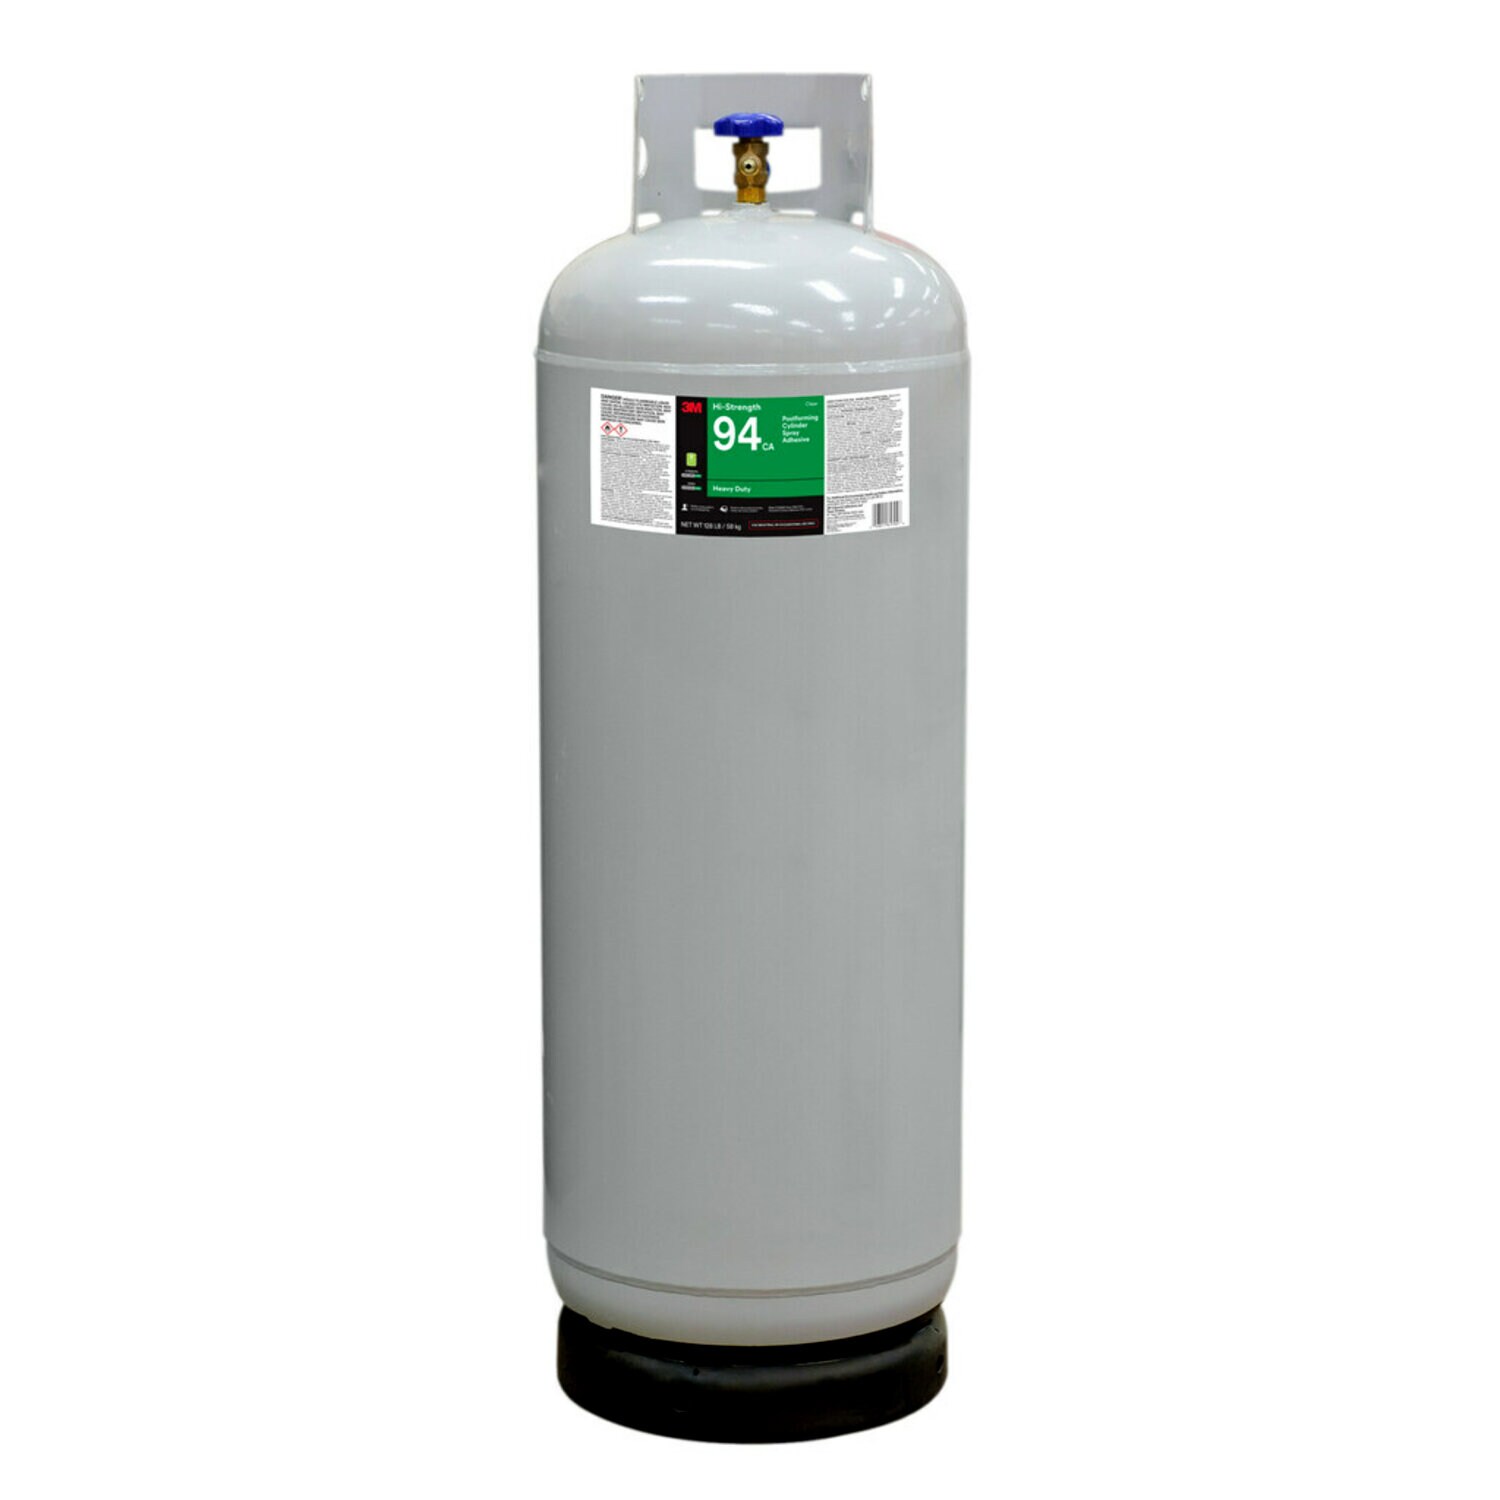 7100138684 - 3M Hi-Strength Postforming 94 CA Cylinder Spray Adhesive, Clear,
Intermediate Cylinder (Net Wt 128 lb)